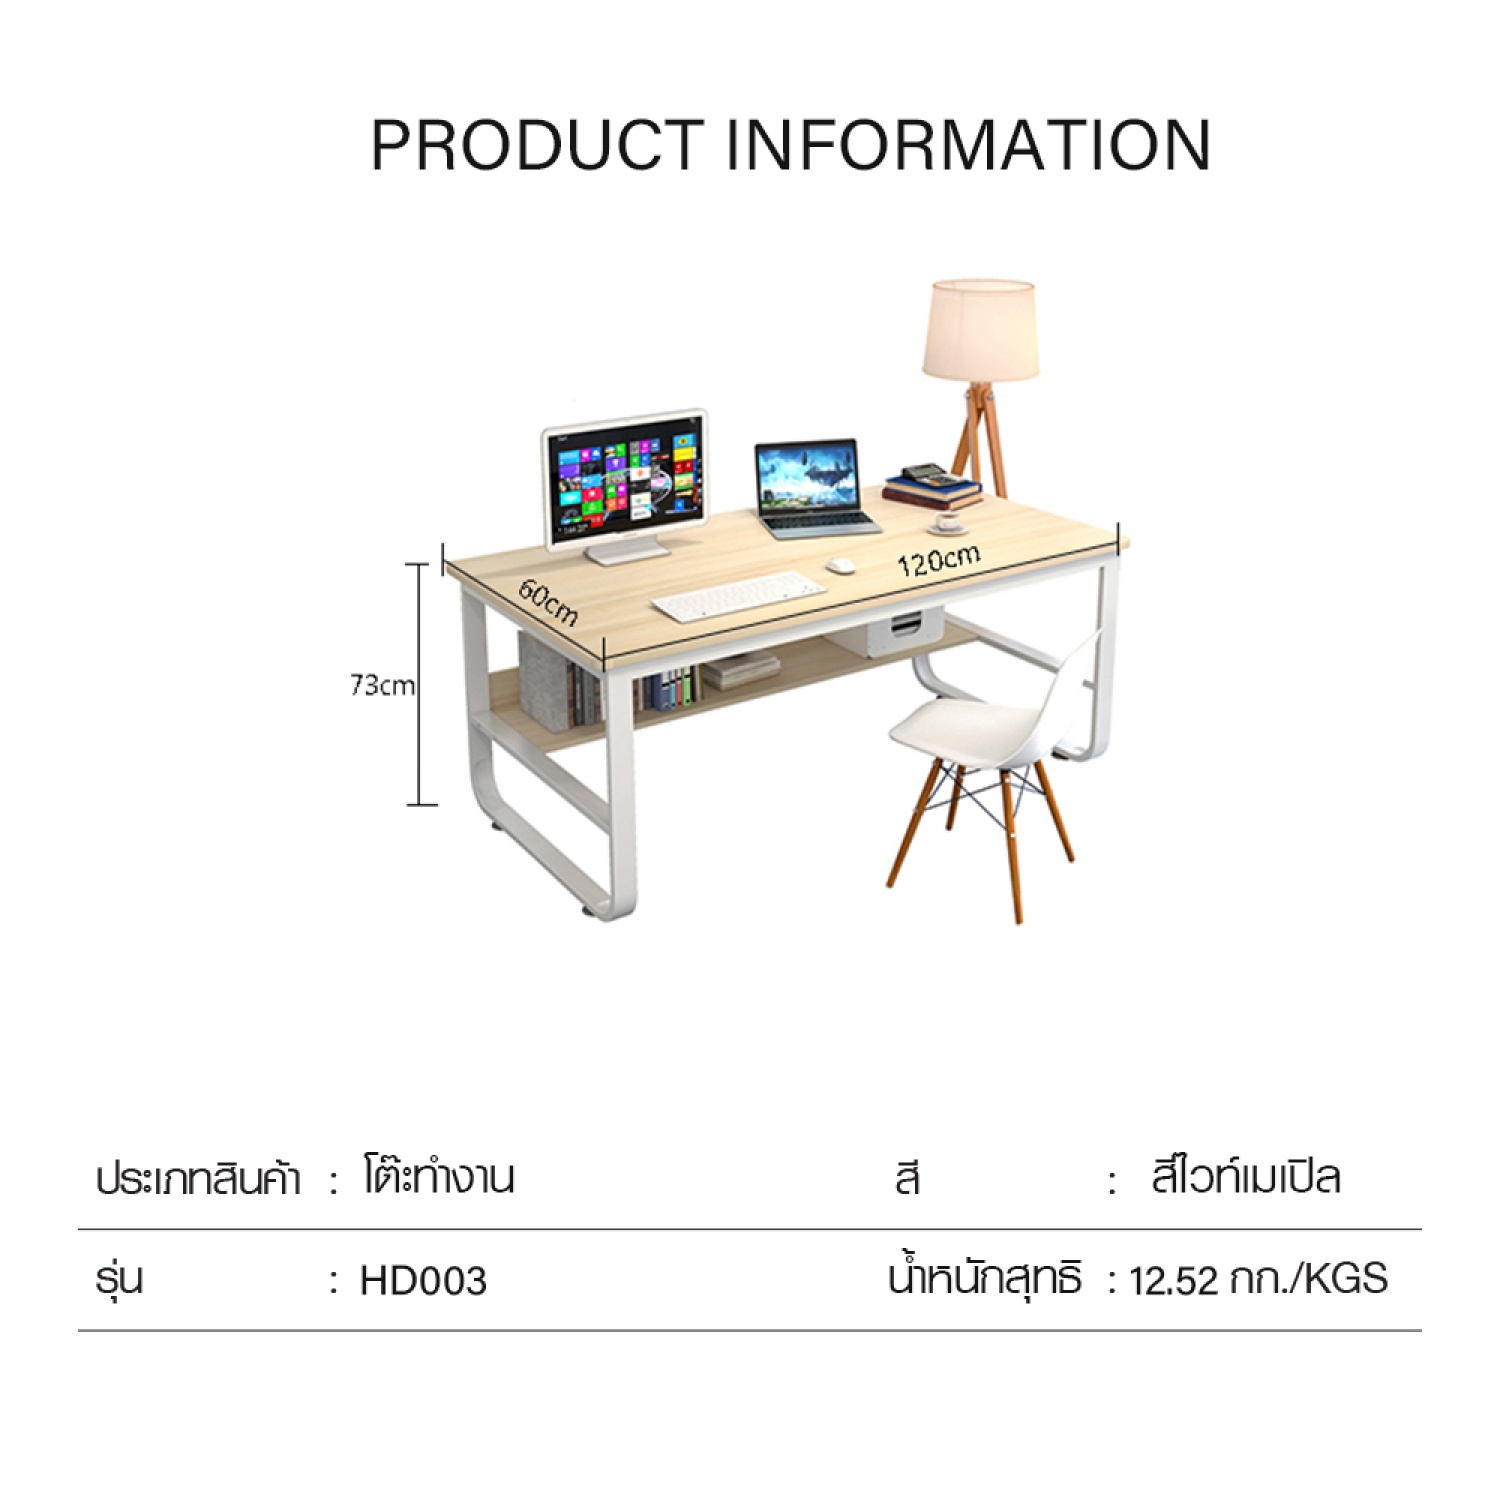 SMITH โต๊ะทำงาน รุ่น HD003 ขนาด 60x120x73ซม. สีไวท์เมเปิล